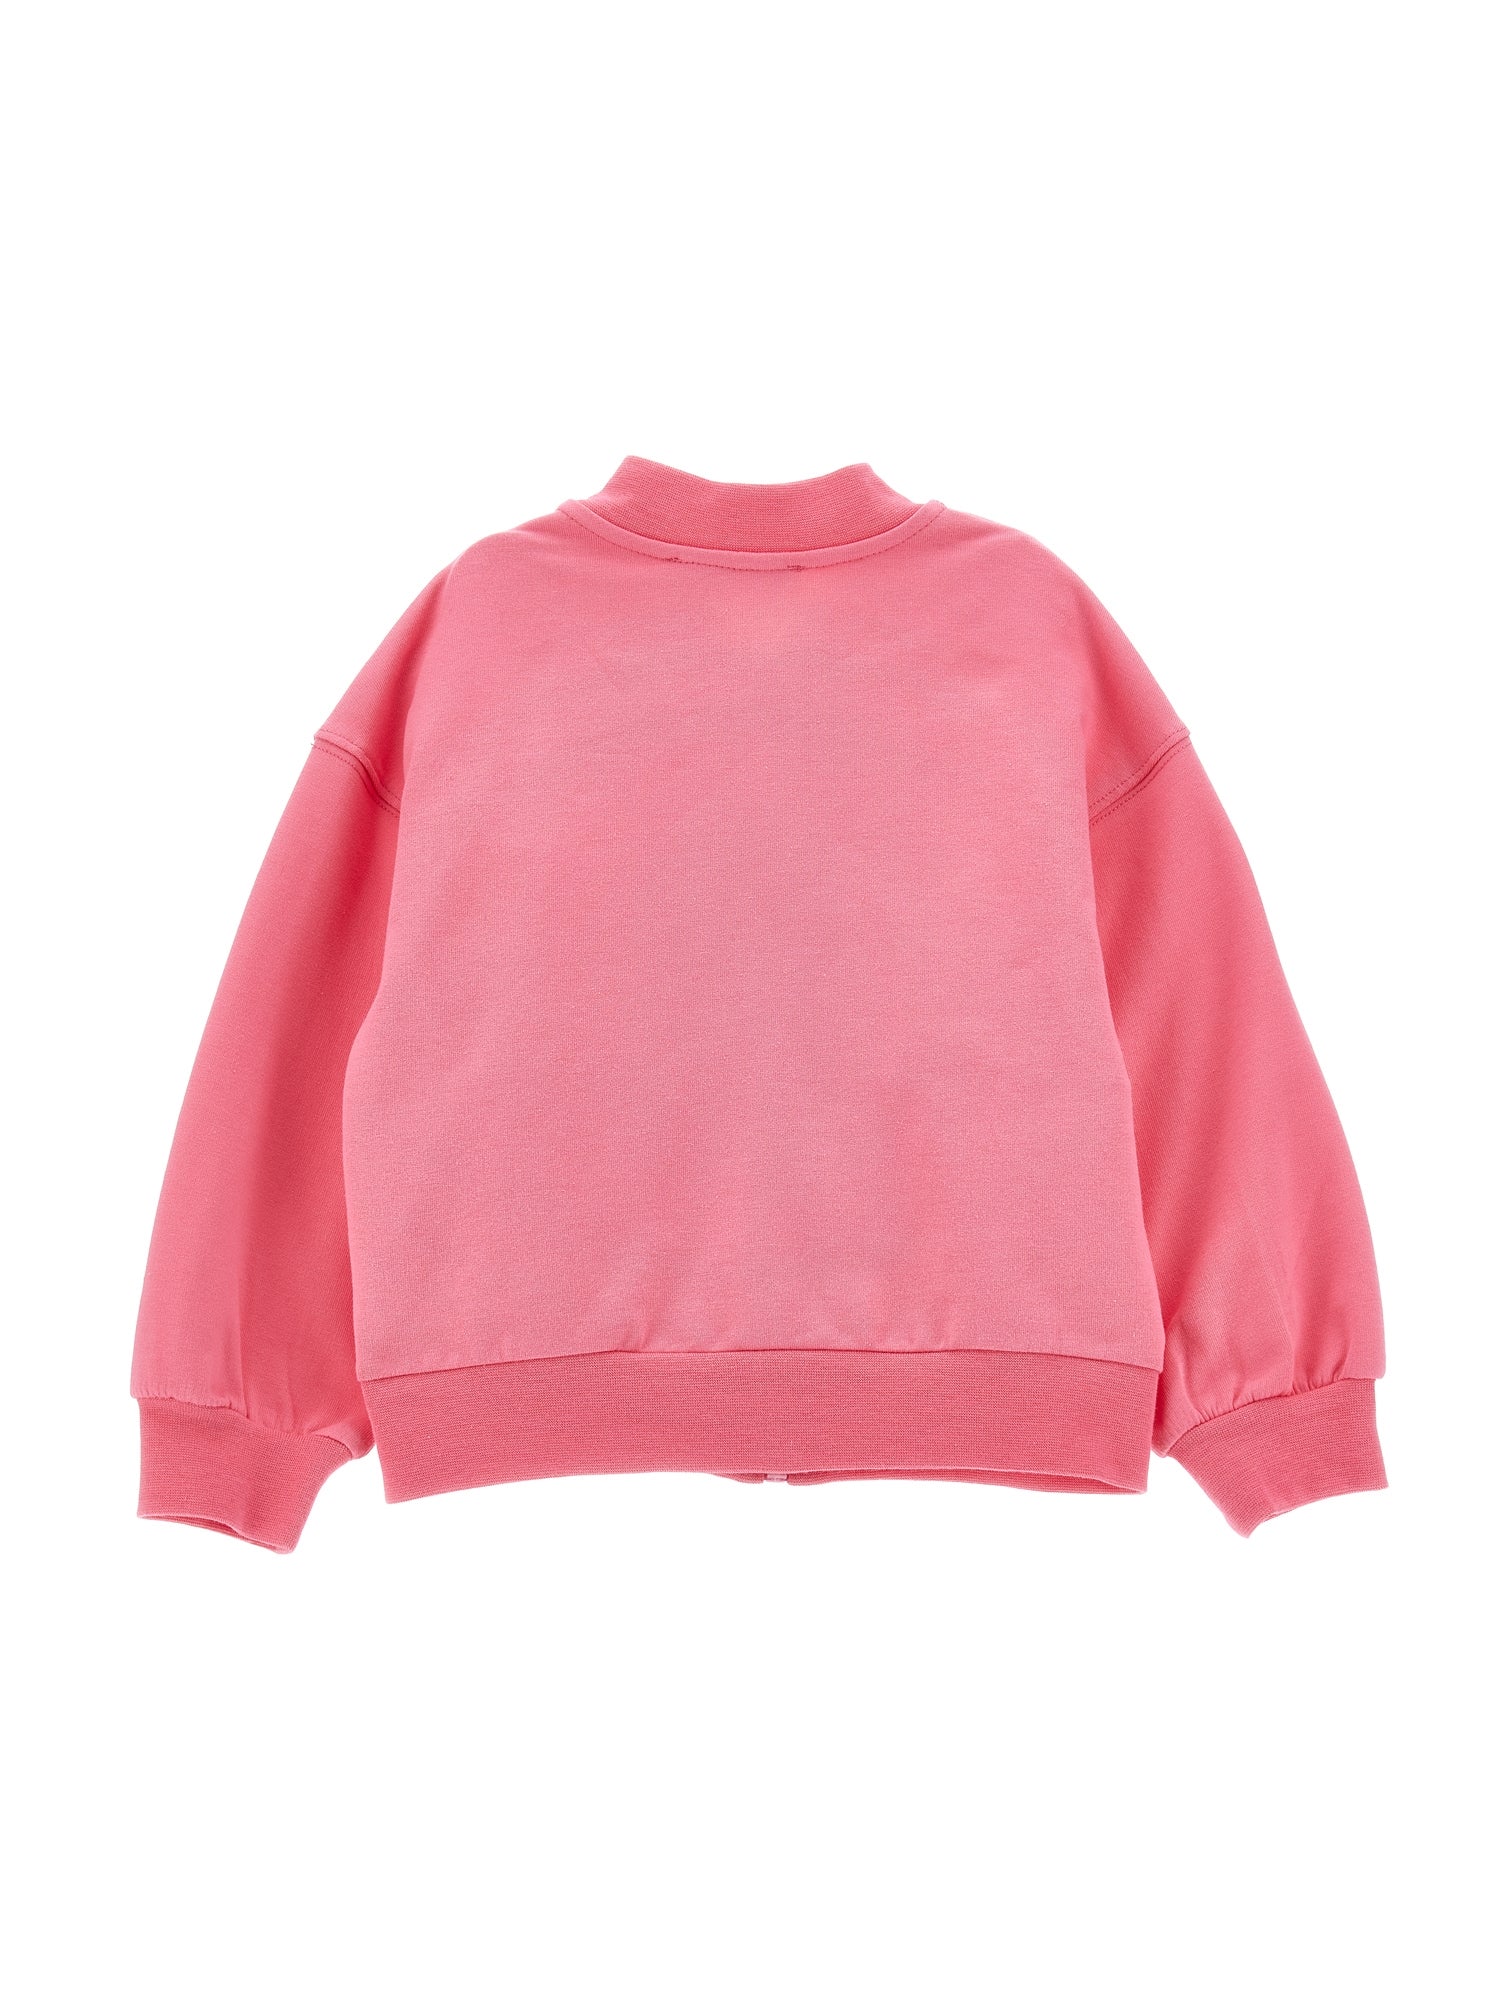 Zip-up sweatshirt with anemone embroidery